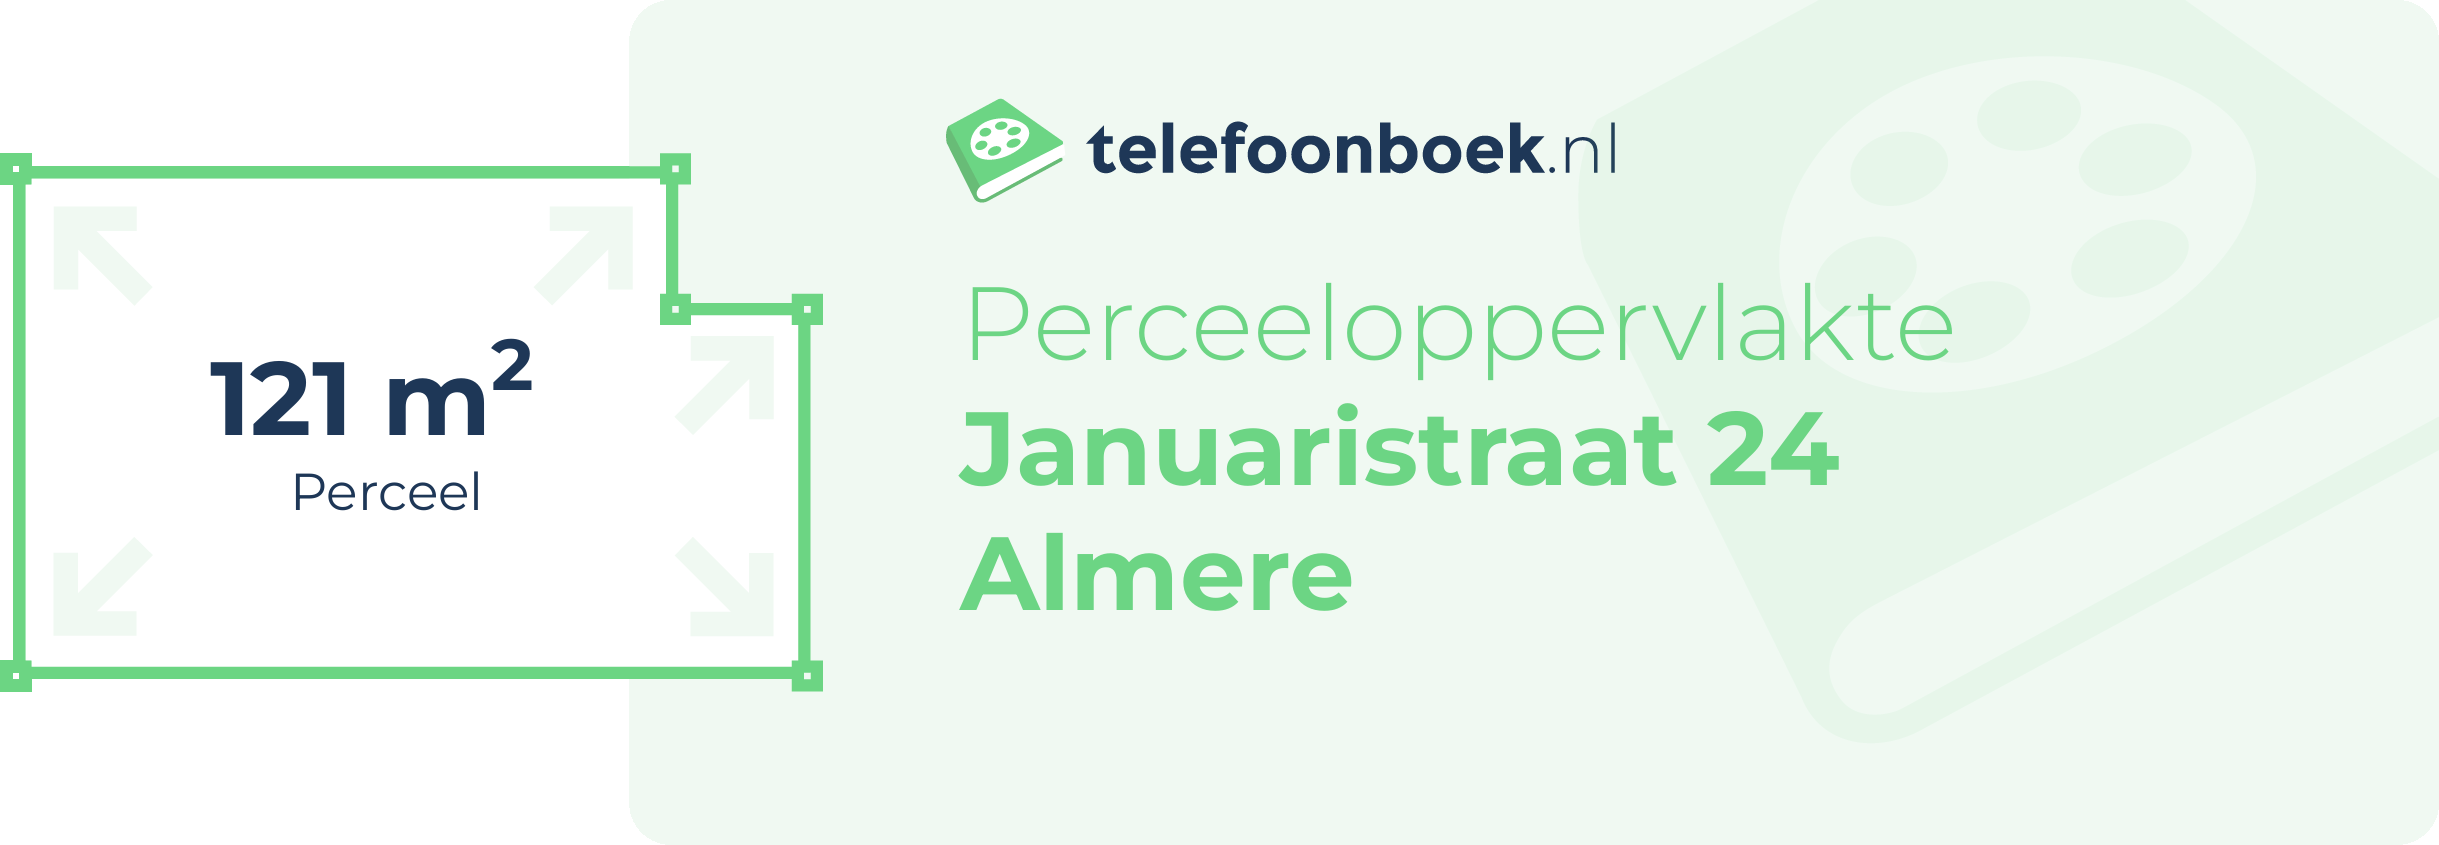 Perceeloppervlakte Januaristraat 24 Almere